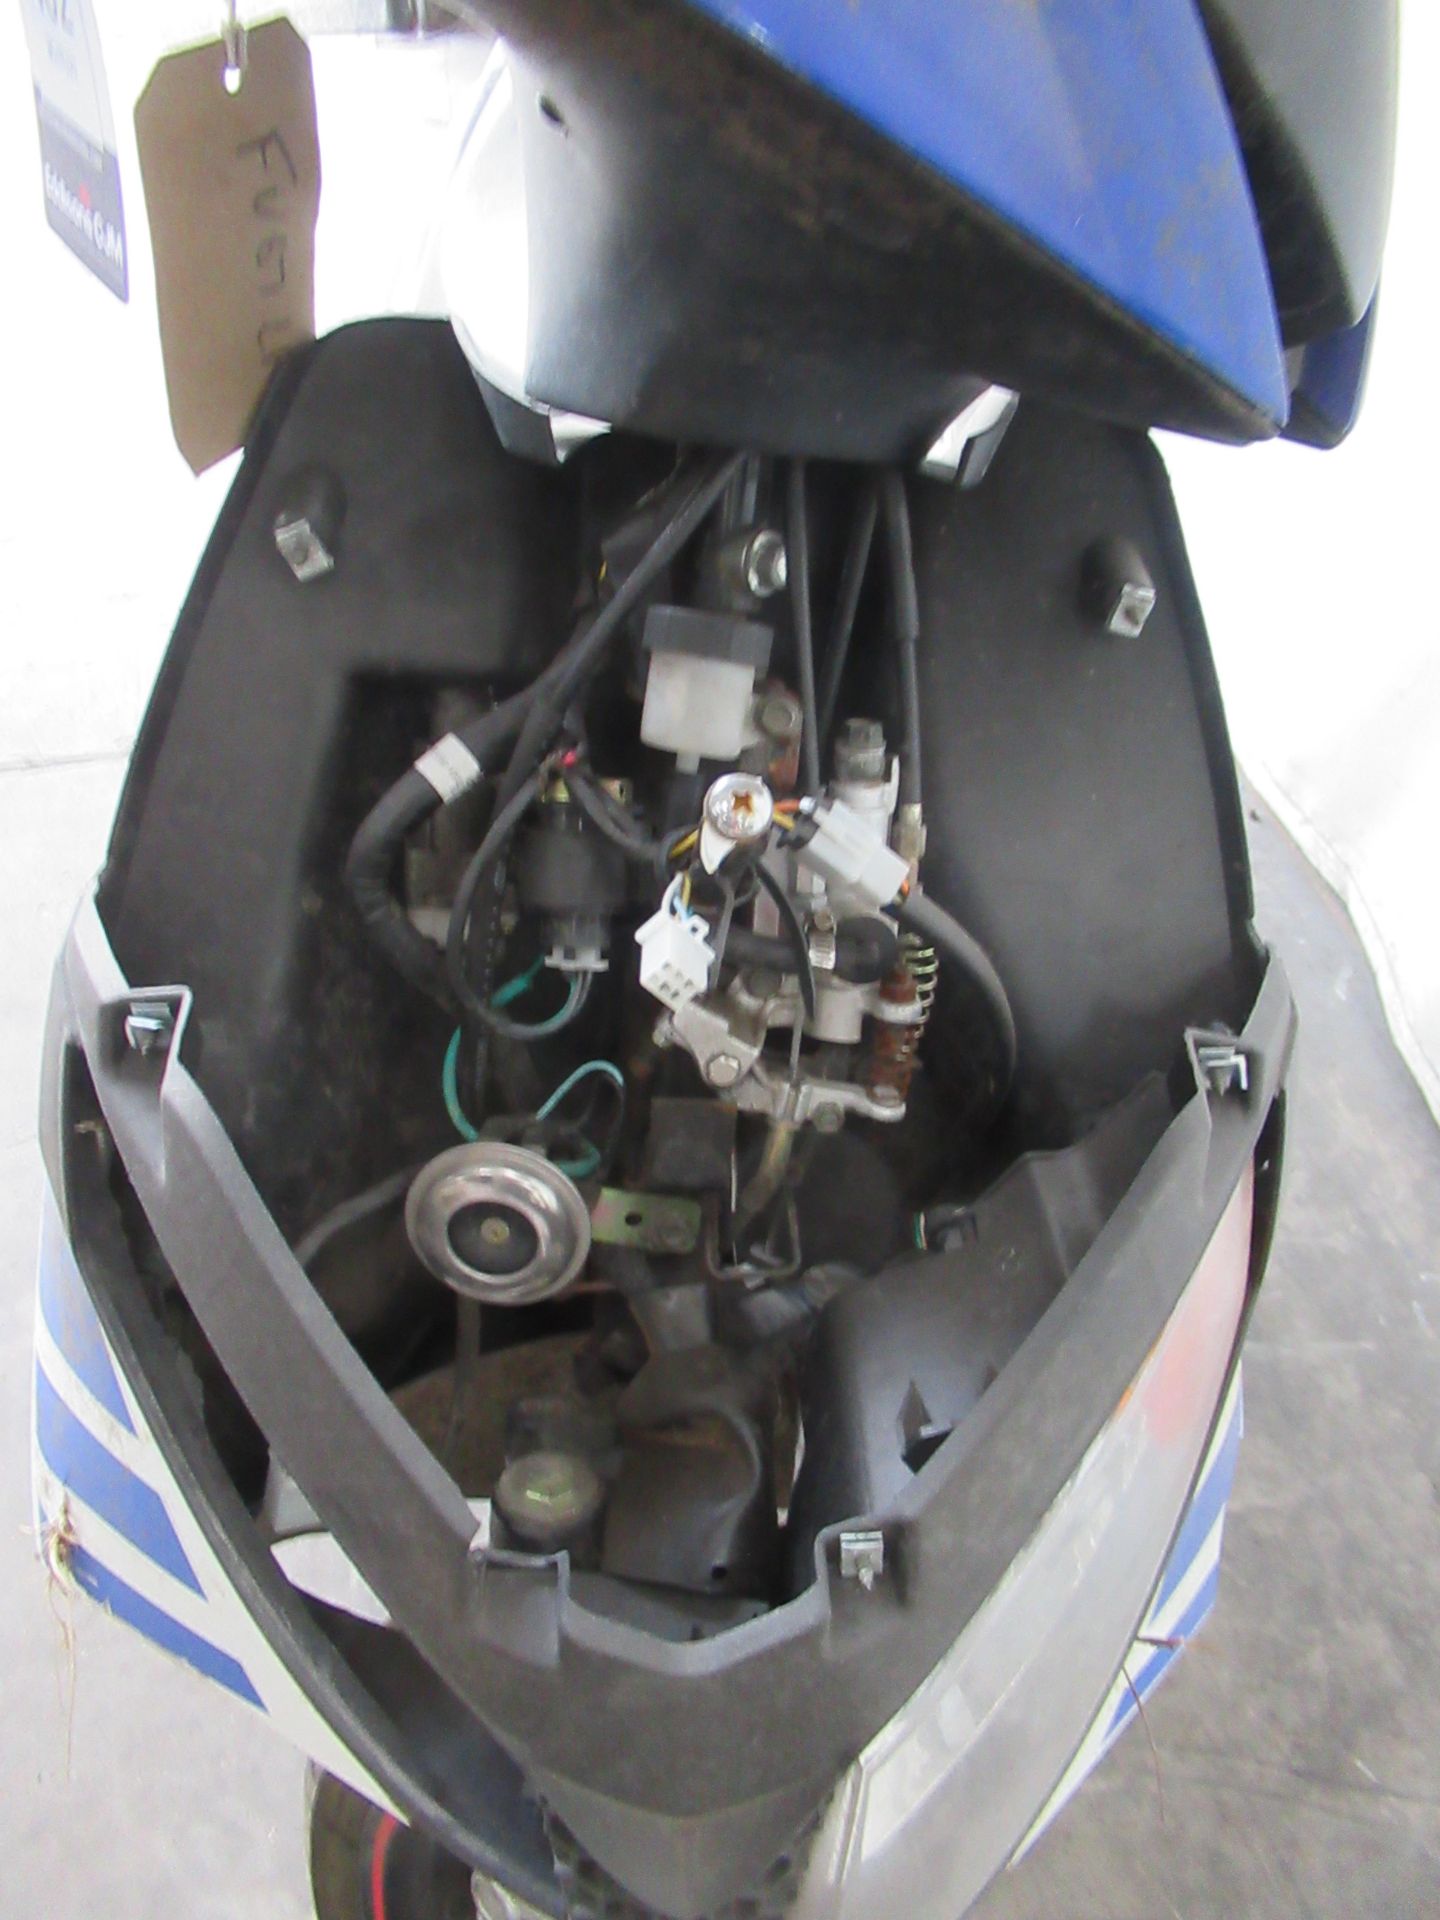 3x Motorini GP125i motorbikes - Image 25 of 30